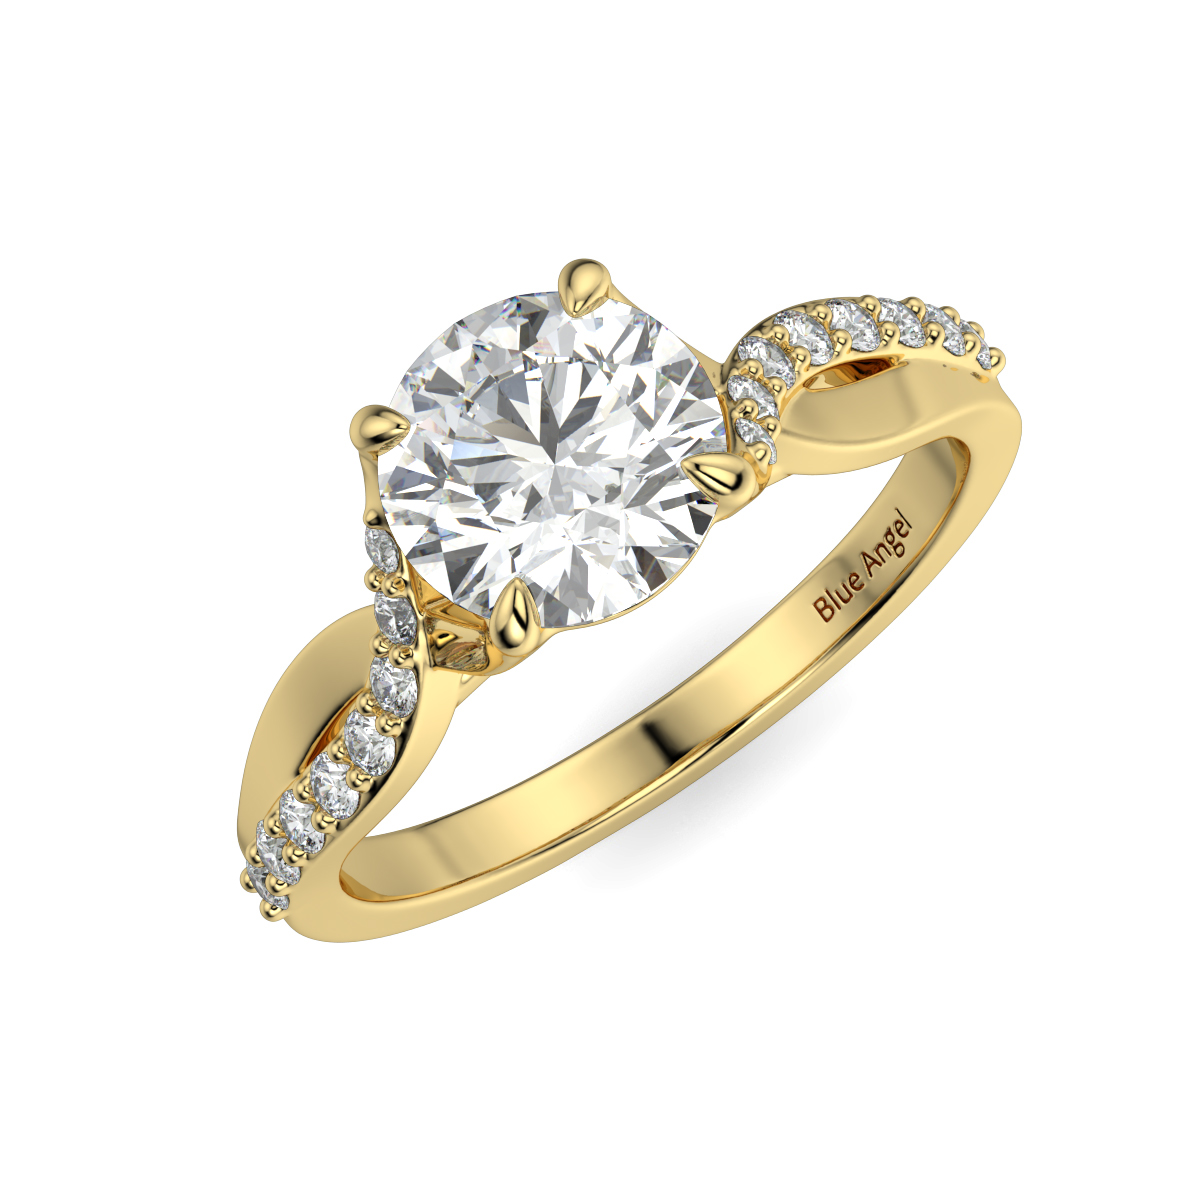 Round Twist Side Stone Engagement Ring